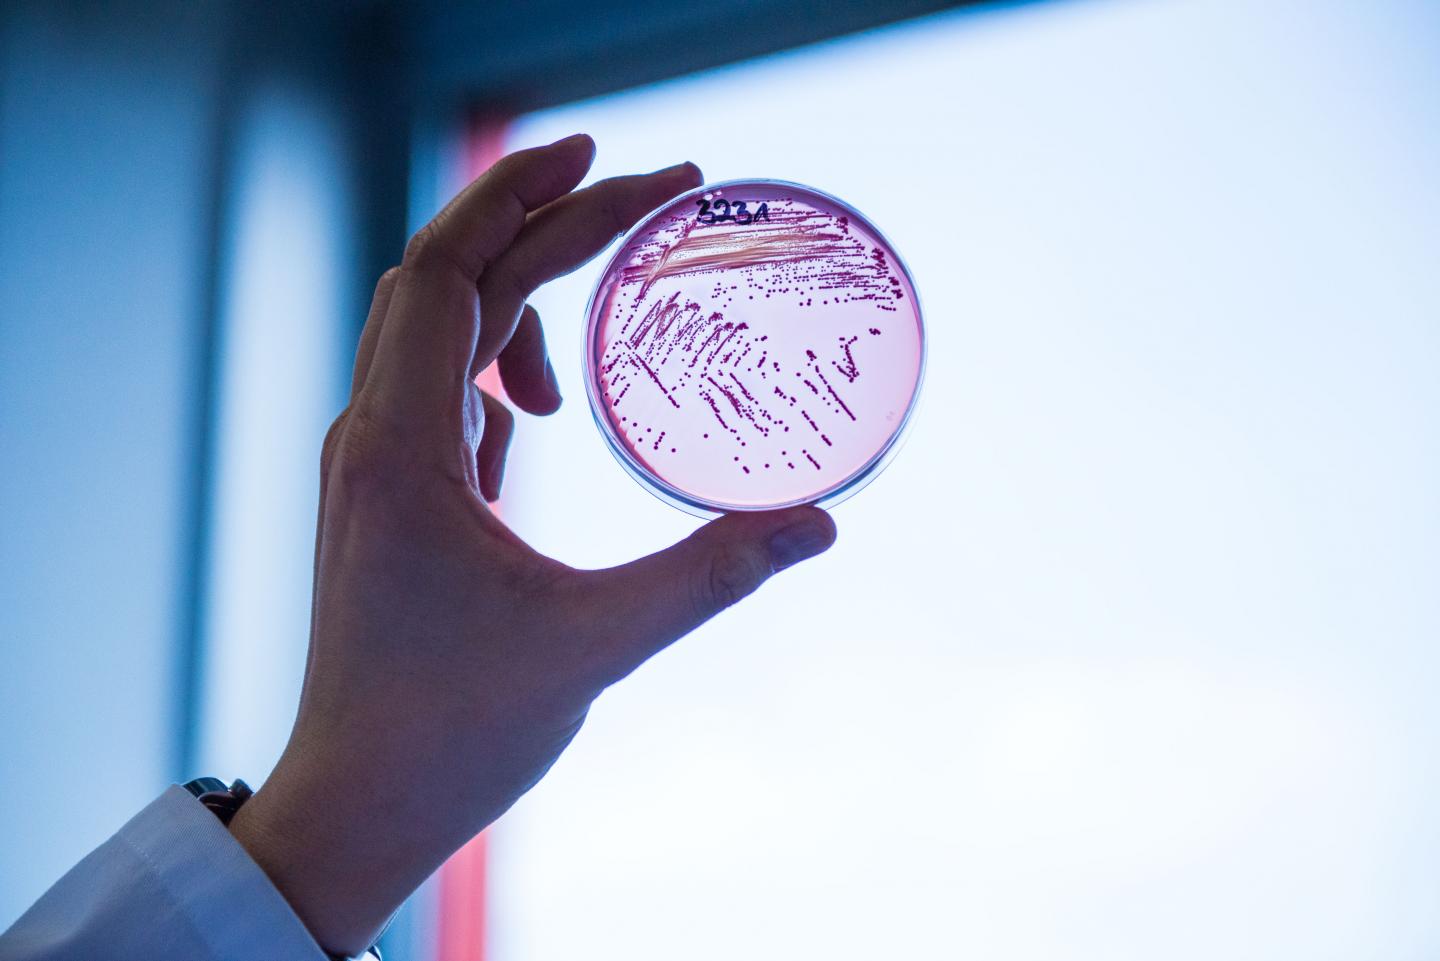 Multidrug-resistant E. coli bacteria